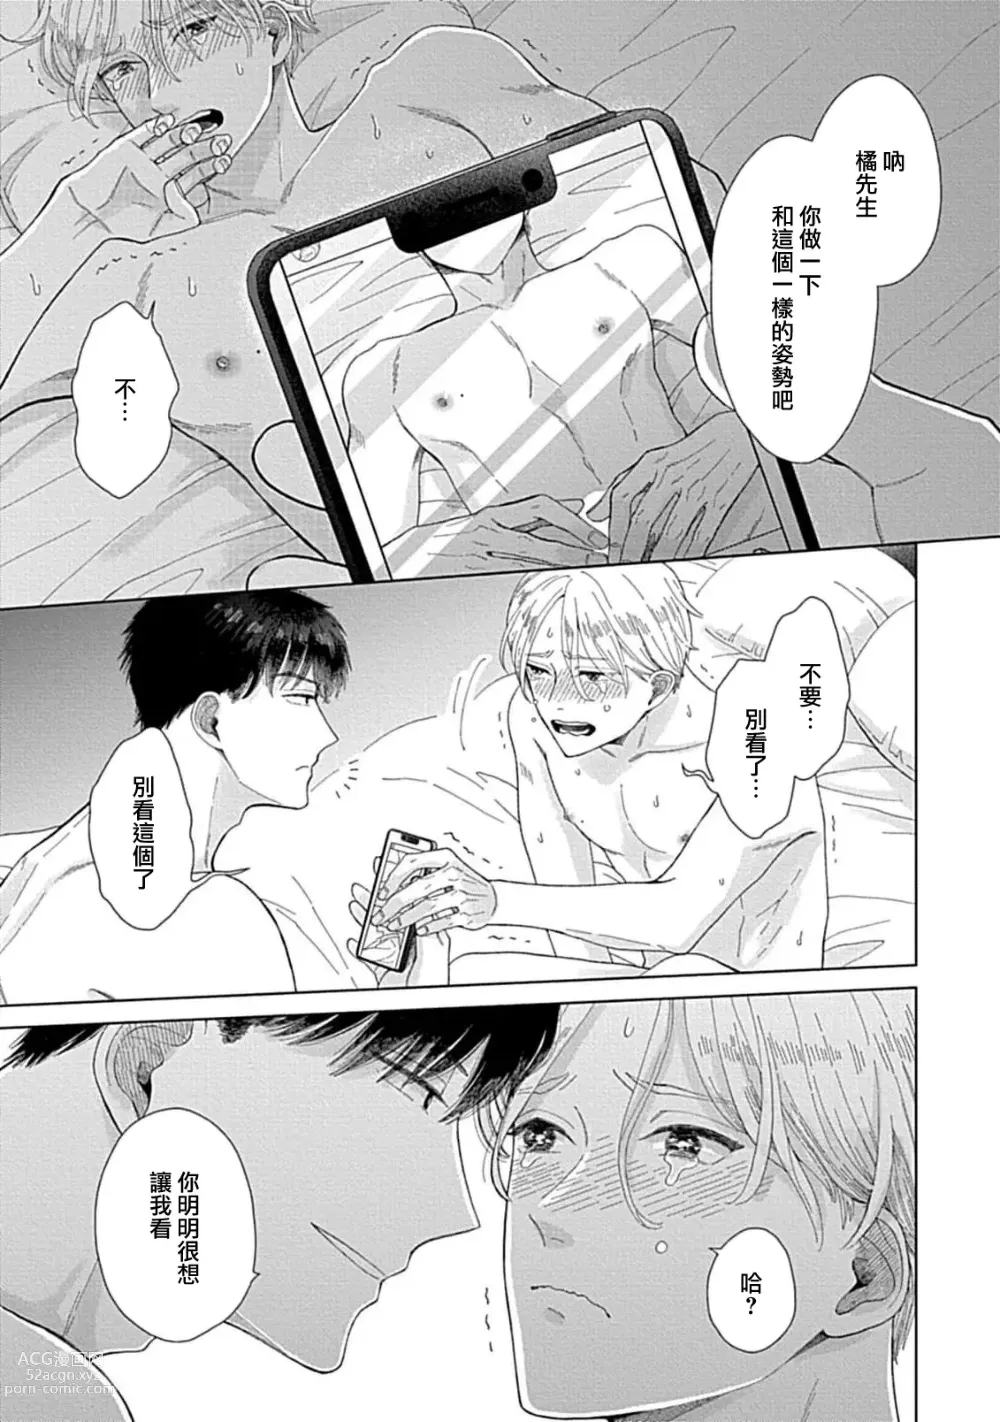 Page 3 of manga 并非不喜但请抱紧1